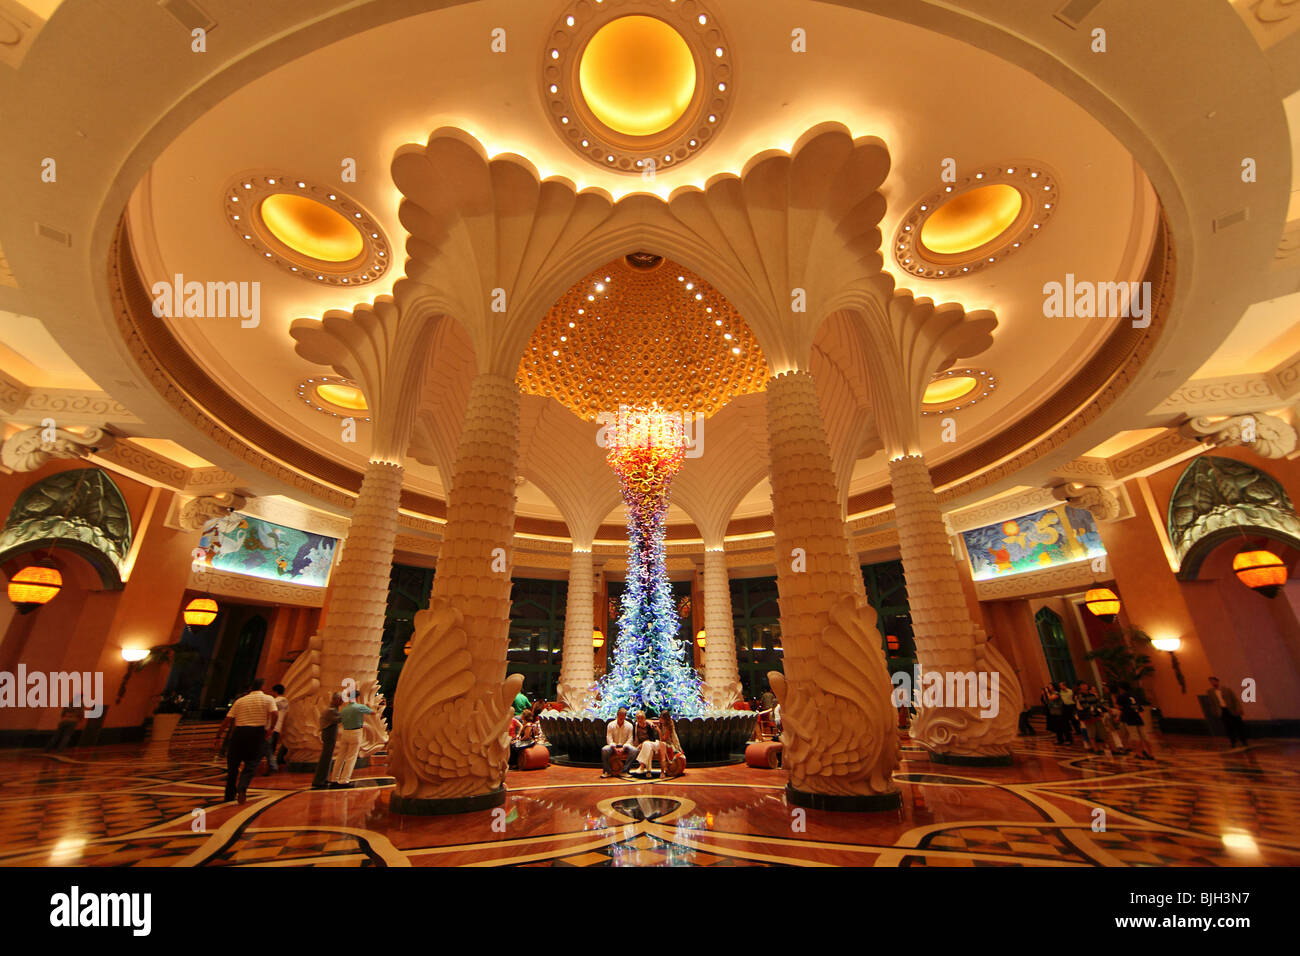 The lobby of the Atlantis Hotel, Dubai, United Arab Emirates Stock Photo